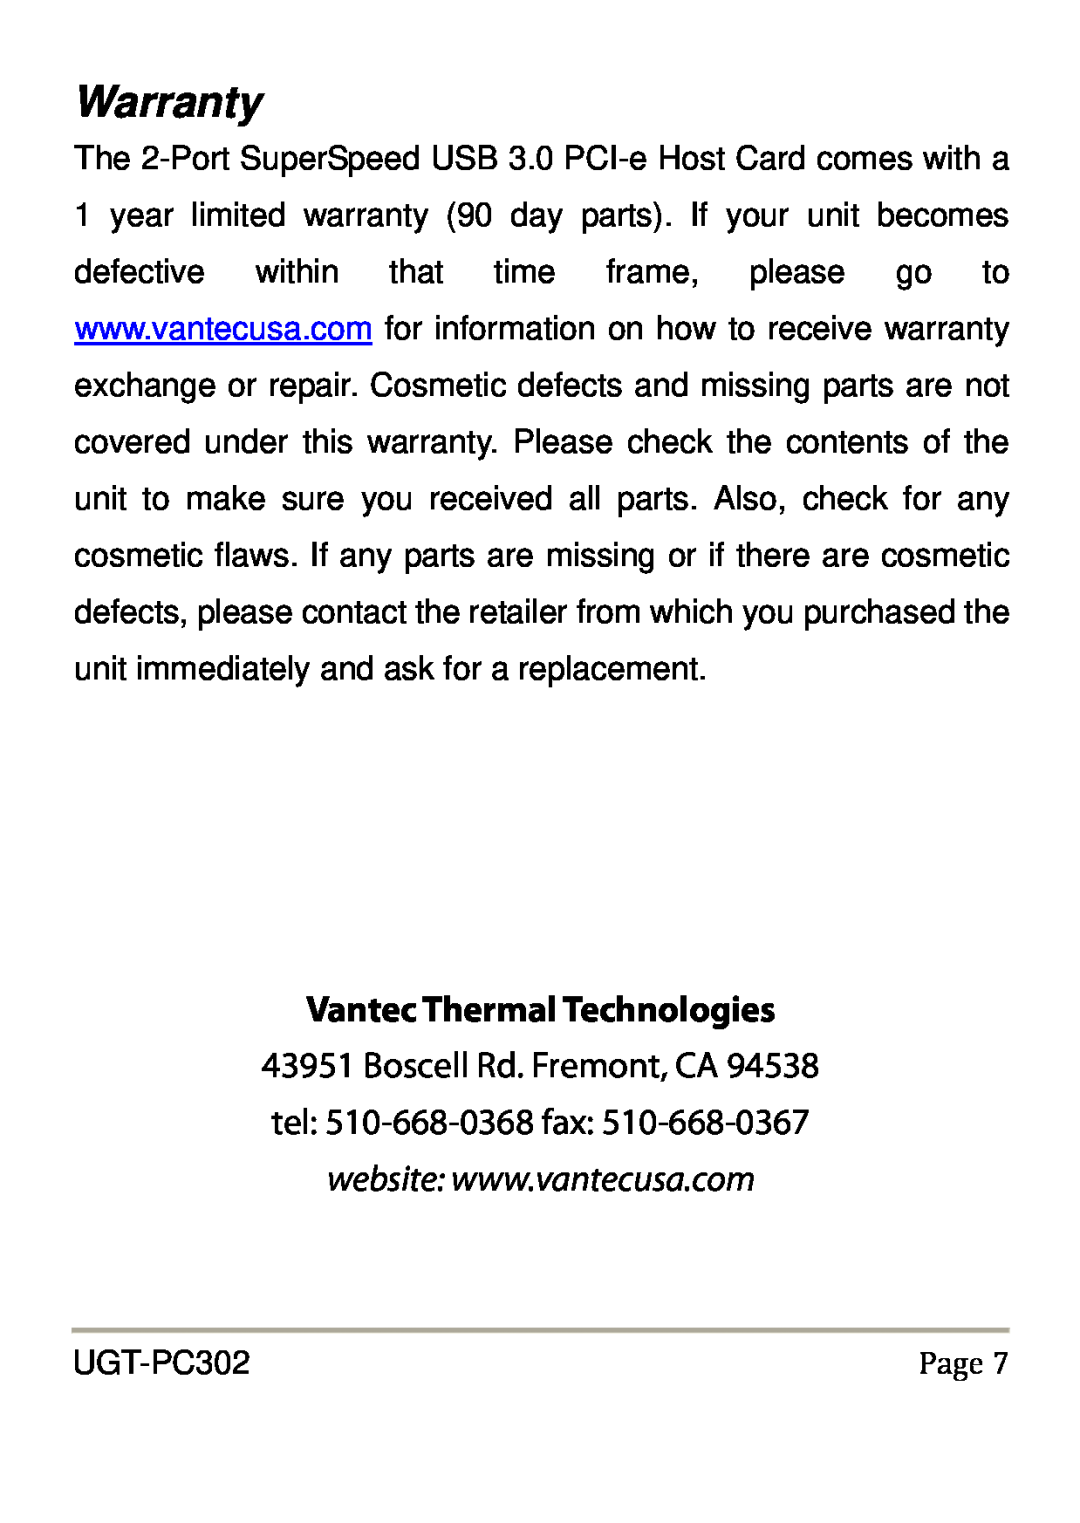 Vantec UGT-PC302 user manual Warranty, Vantec Thermal Technologies, Boscell Rd. Fremont, CA tel 510-668-0368 fax, Page 